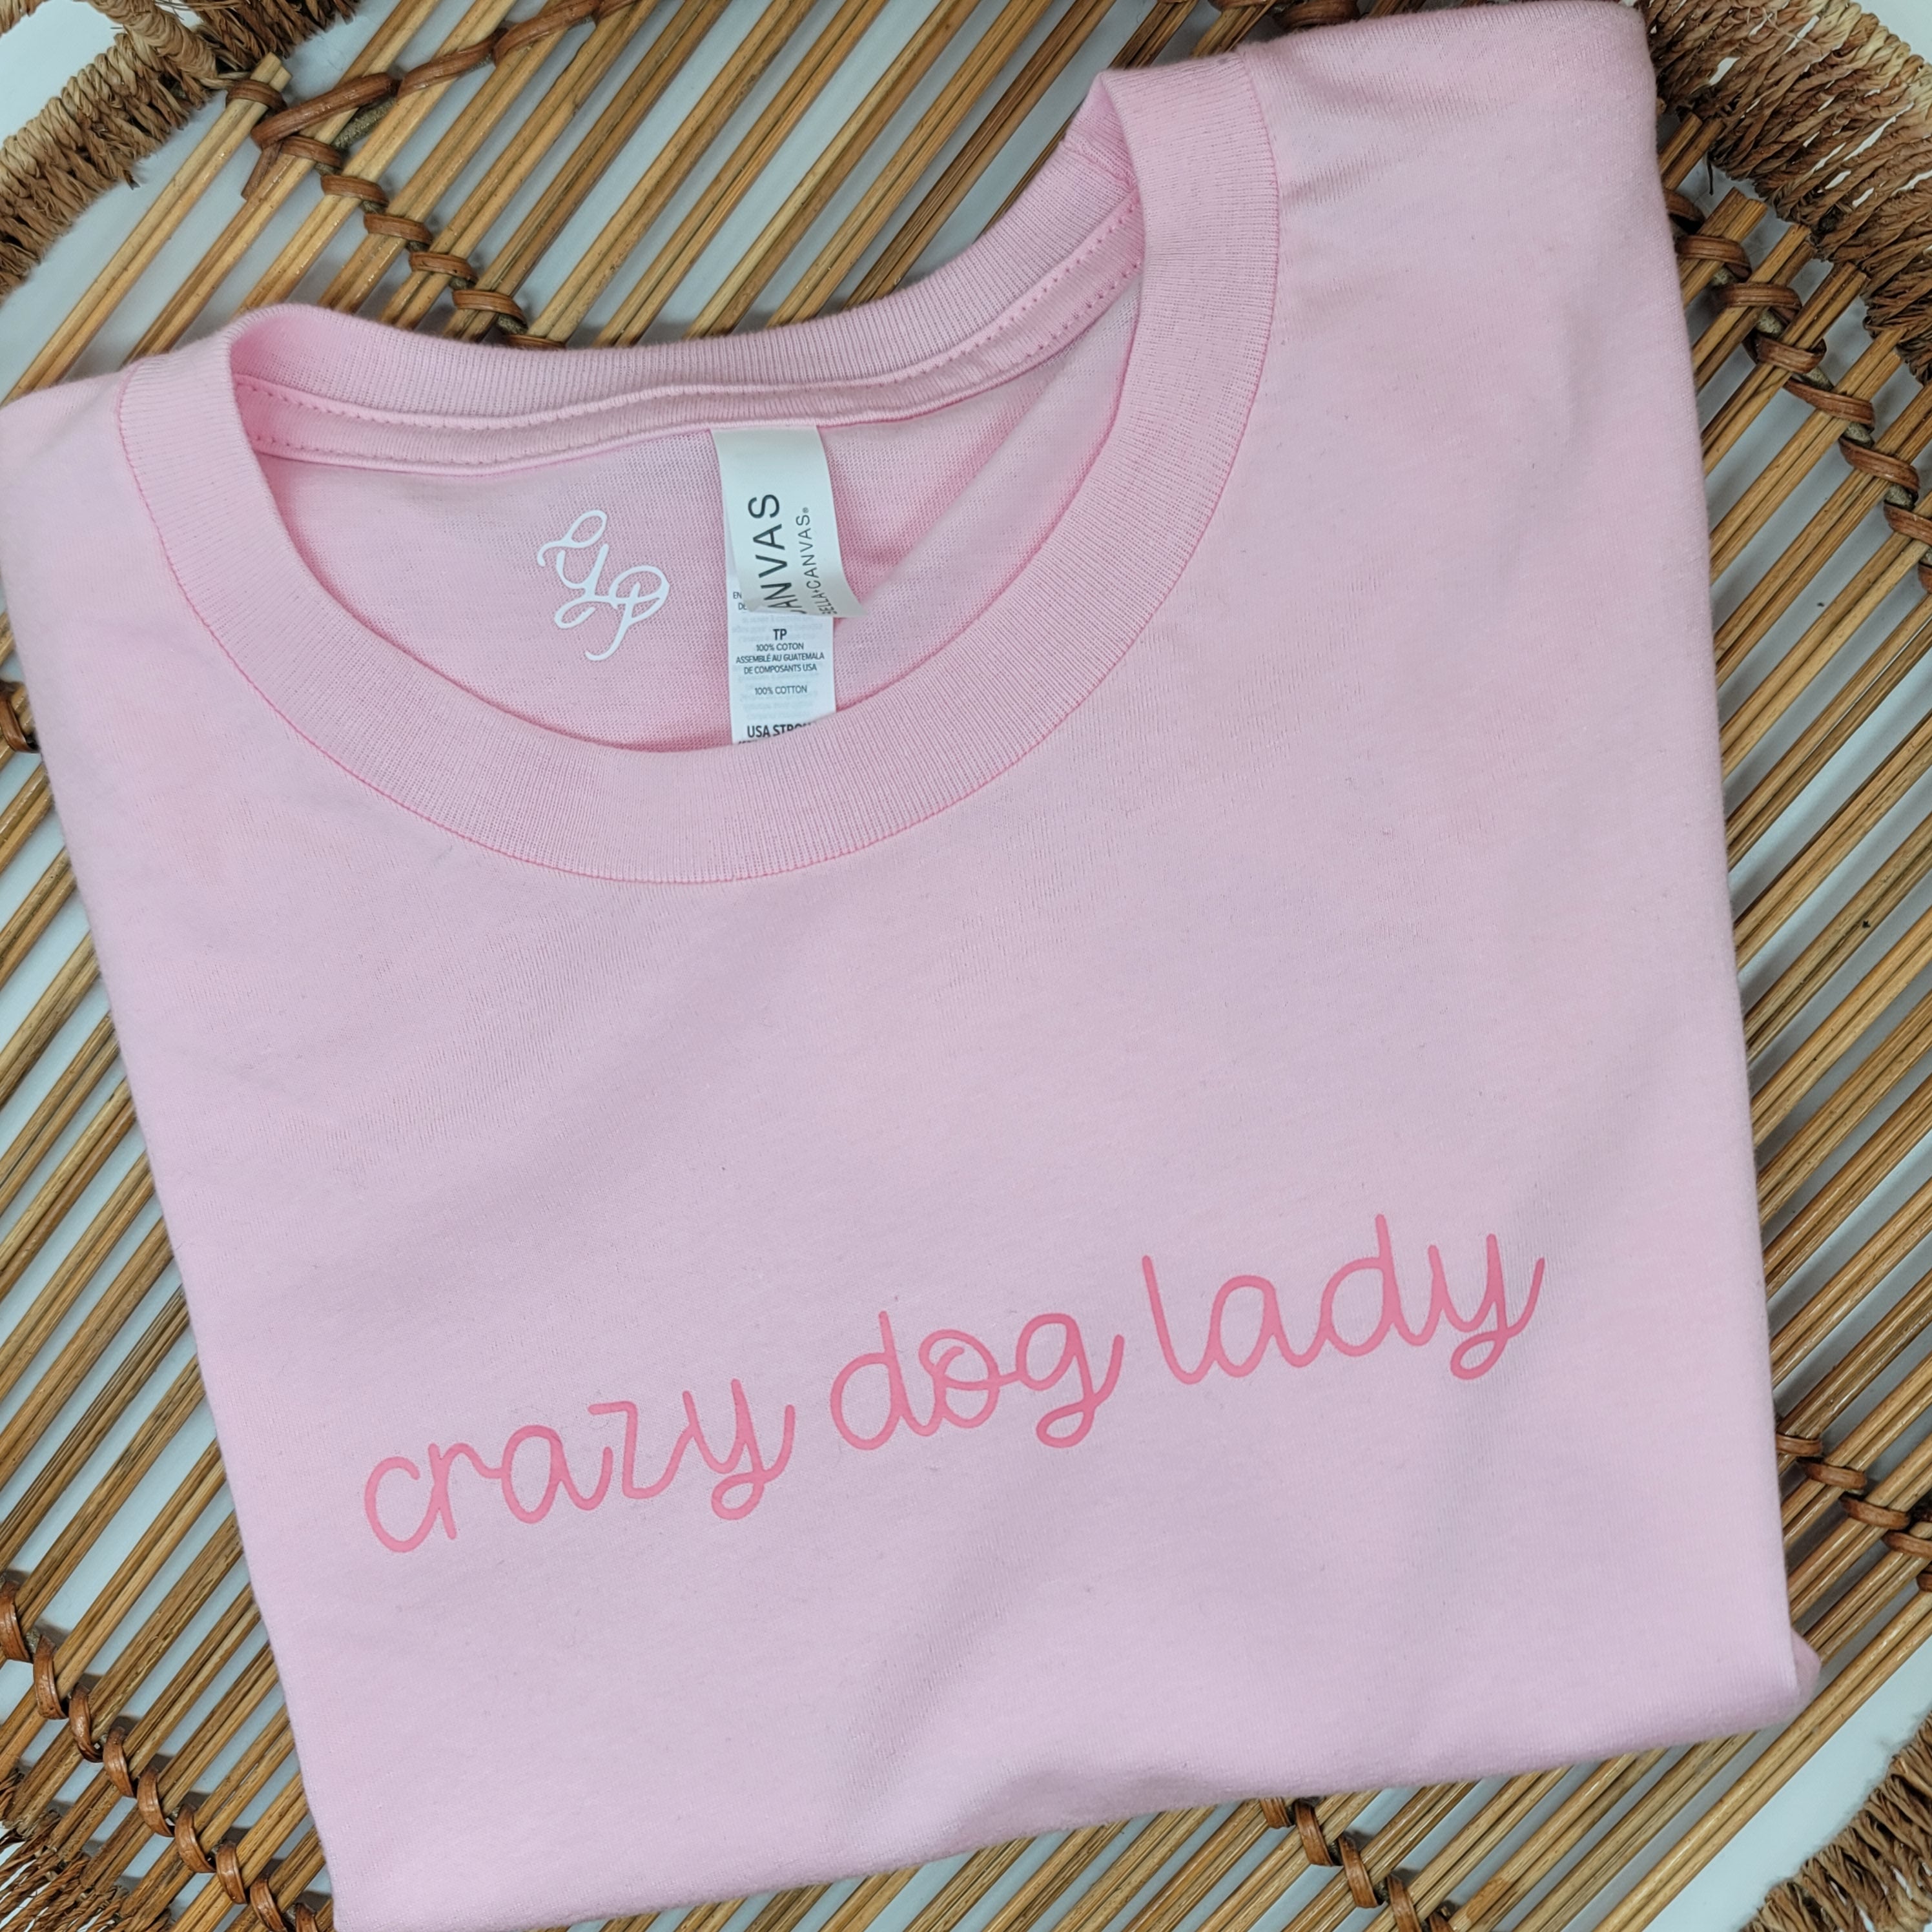 *SALE* Crazy Dog Lady T-shirt